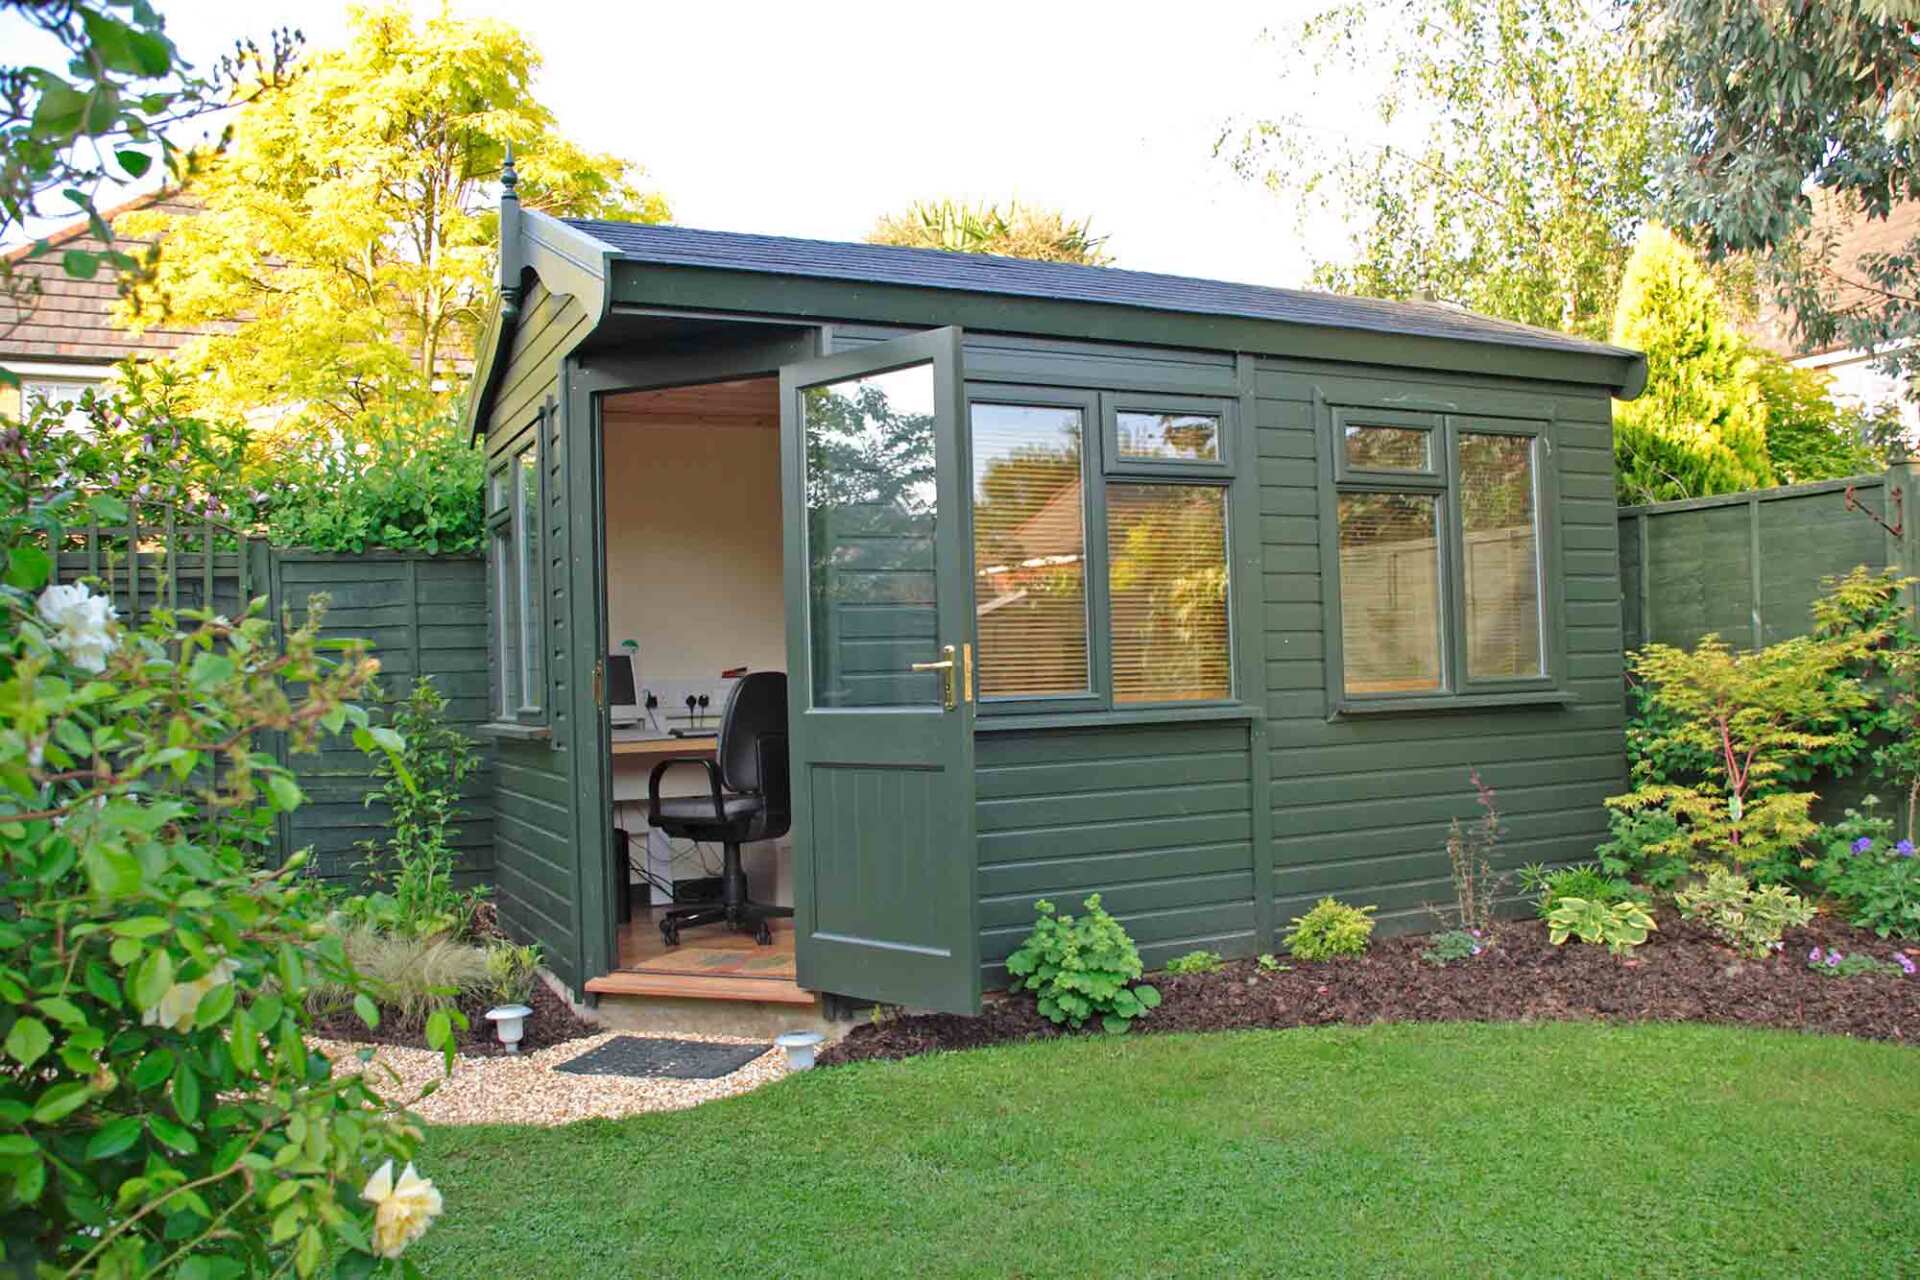 Green timber office installed in suburban garden